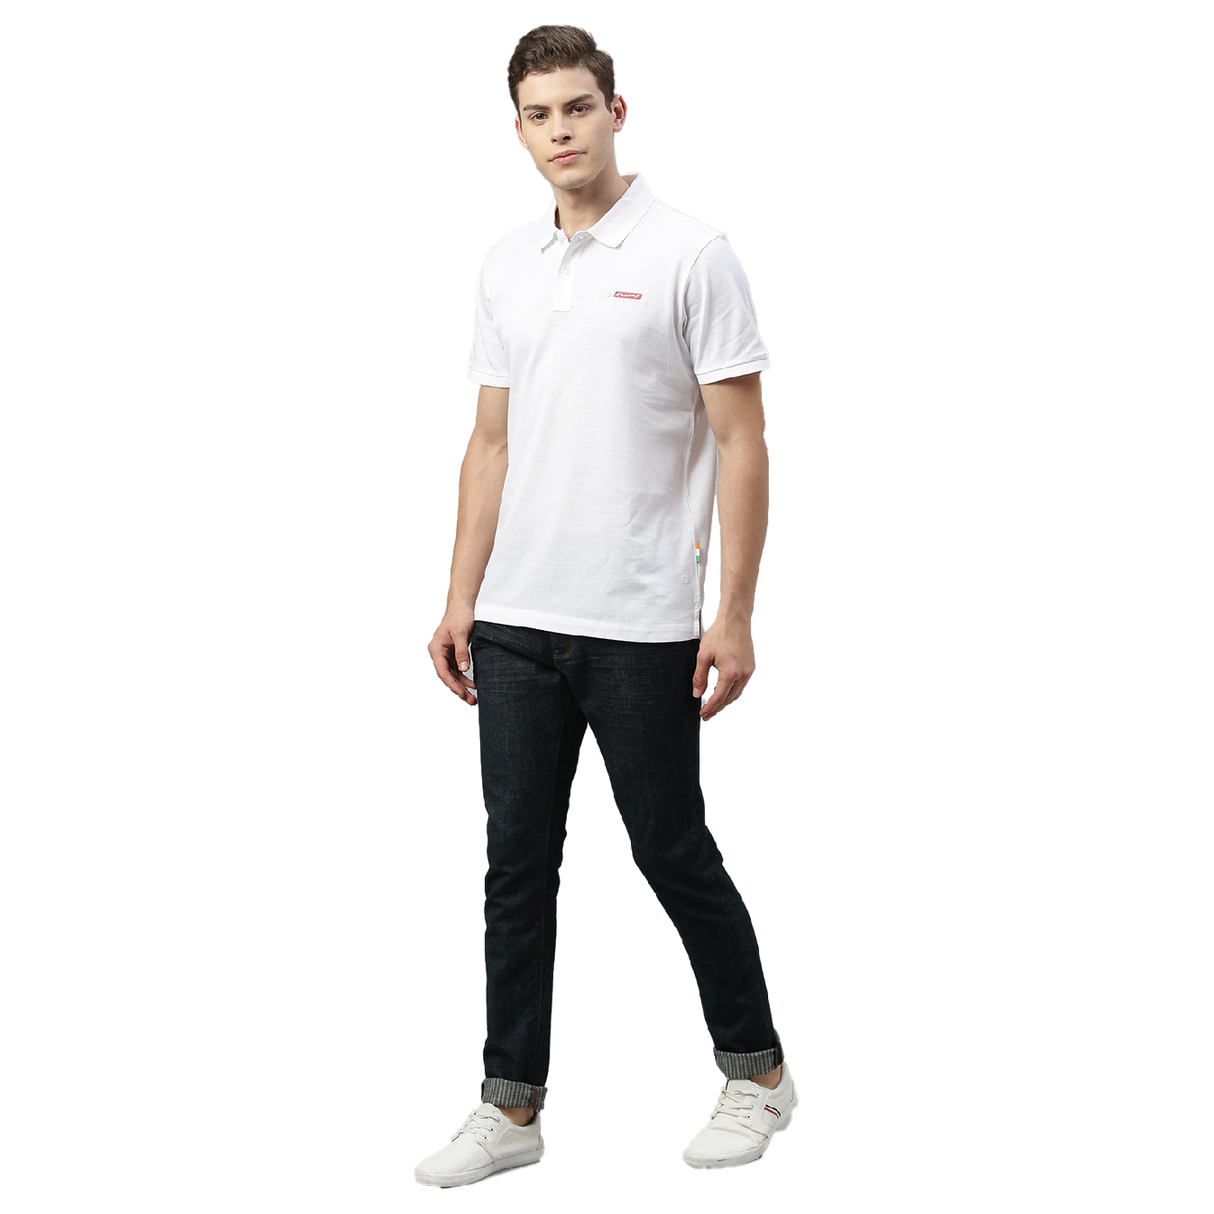 TVS Racing Polo T Shirt Cotton (White)